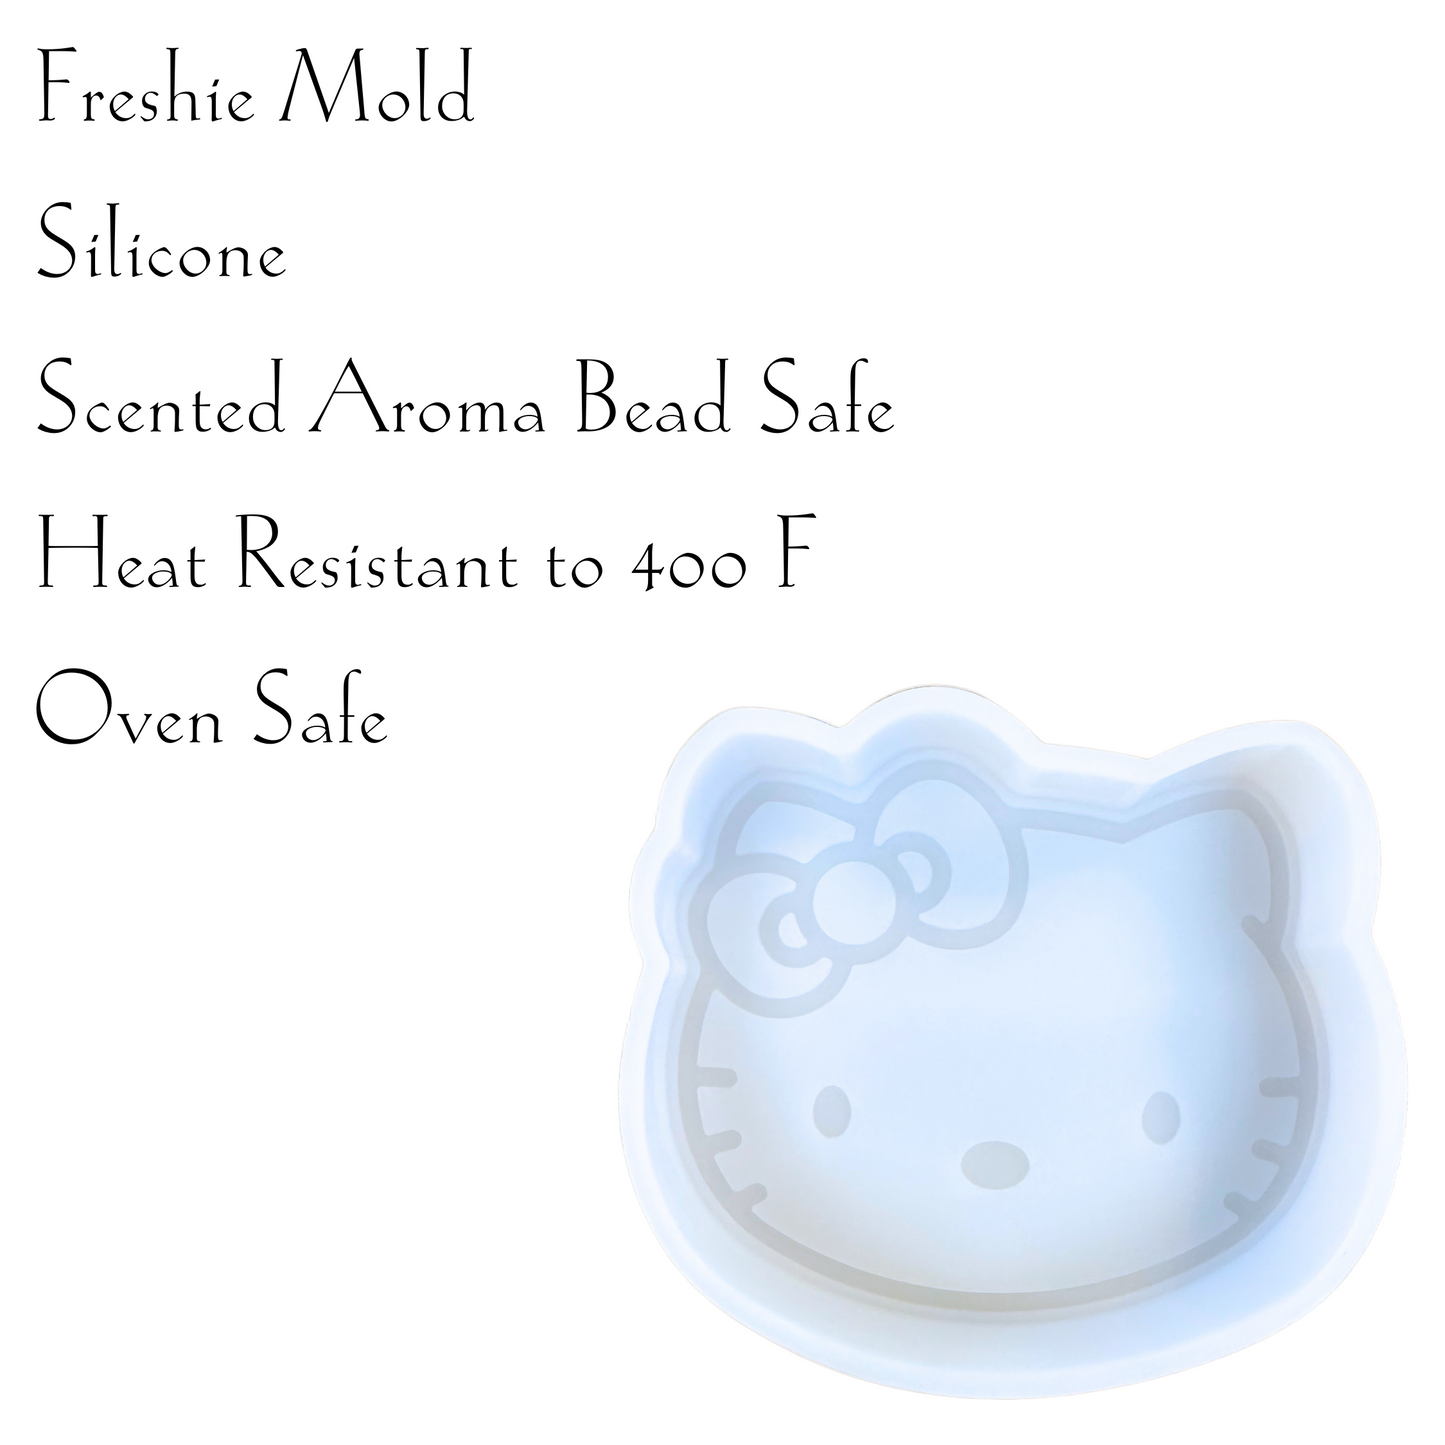 Japanese Kitty Freshie Silicone Mold 3.5 x 3.75 x 0.8”